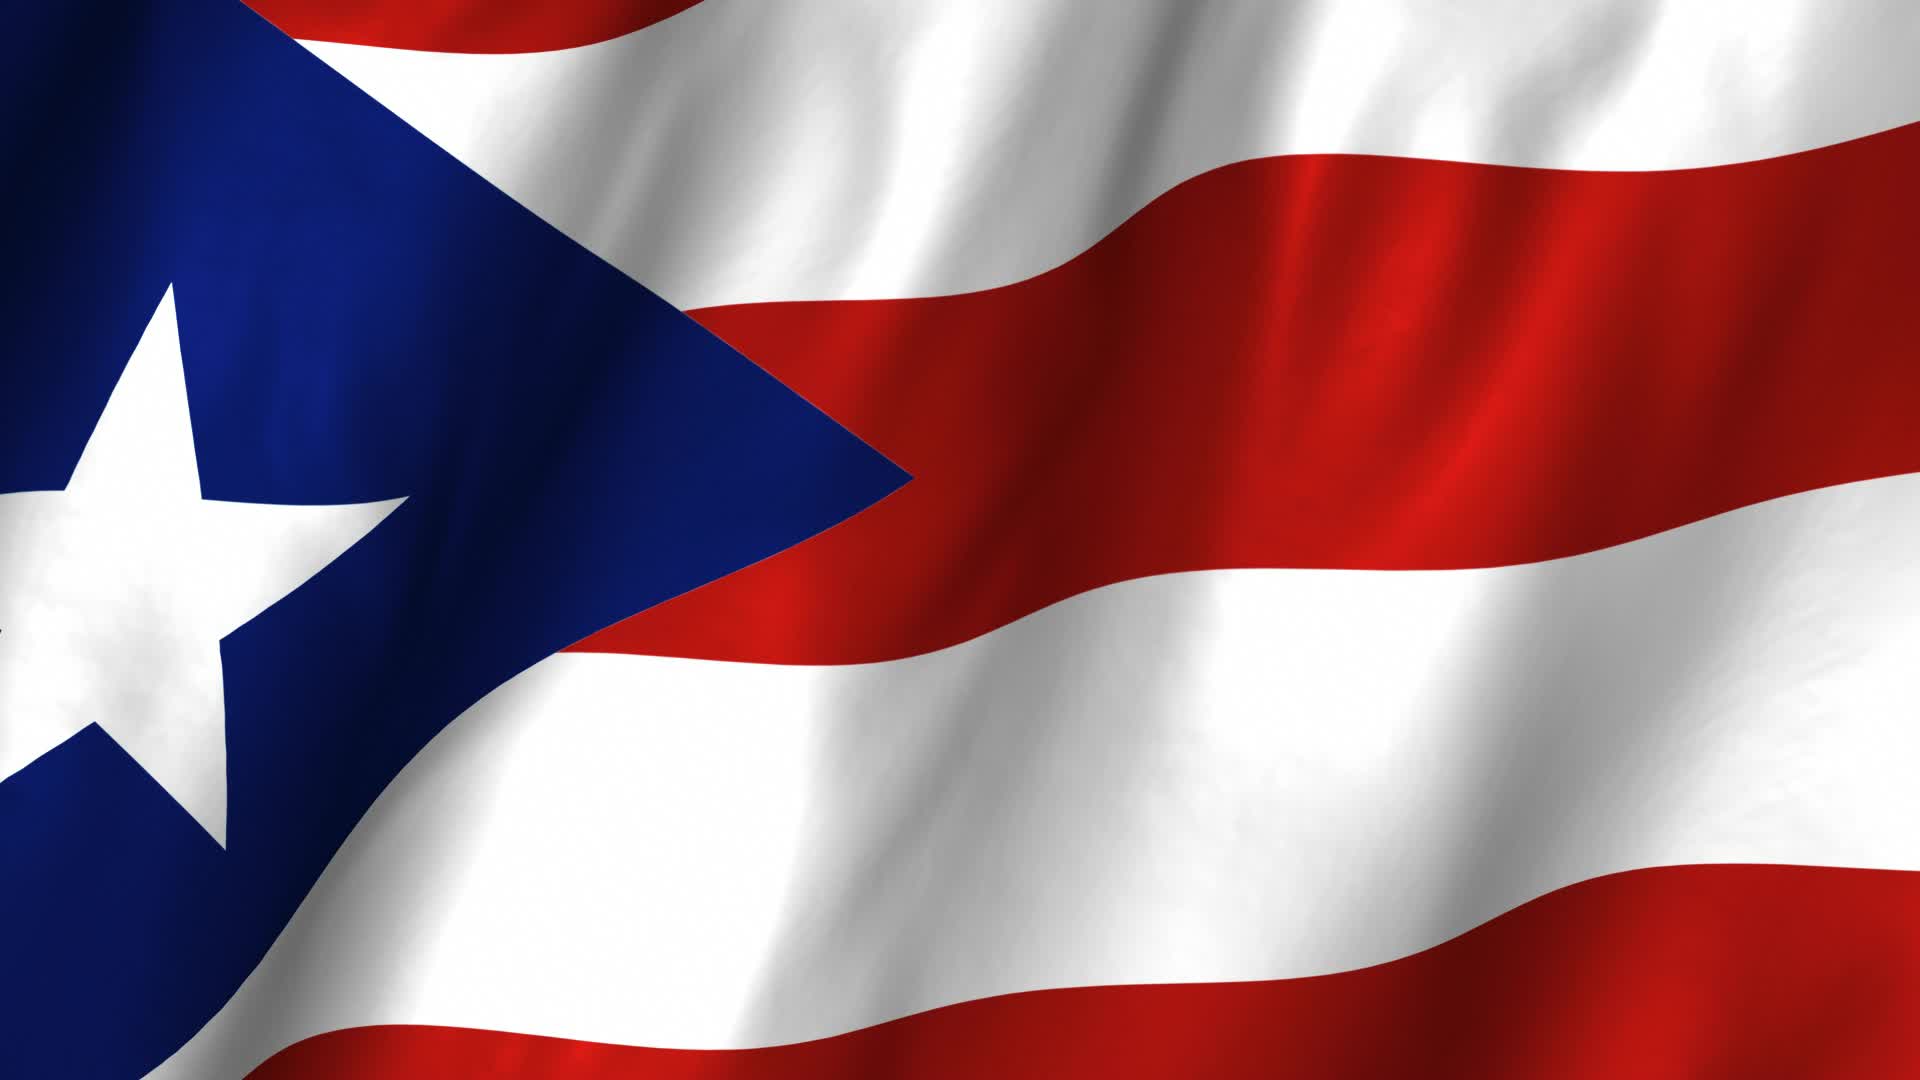 Puerto Rico Flag Desktop Wallpapers 50702 1920x1080 px